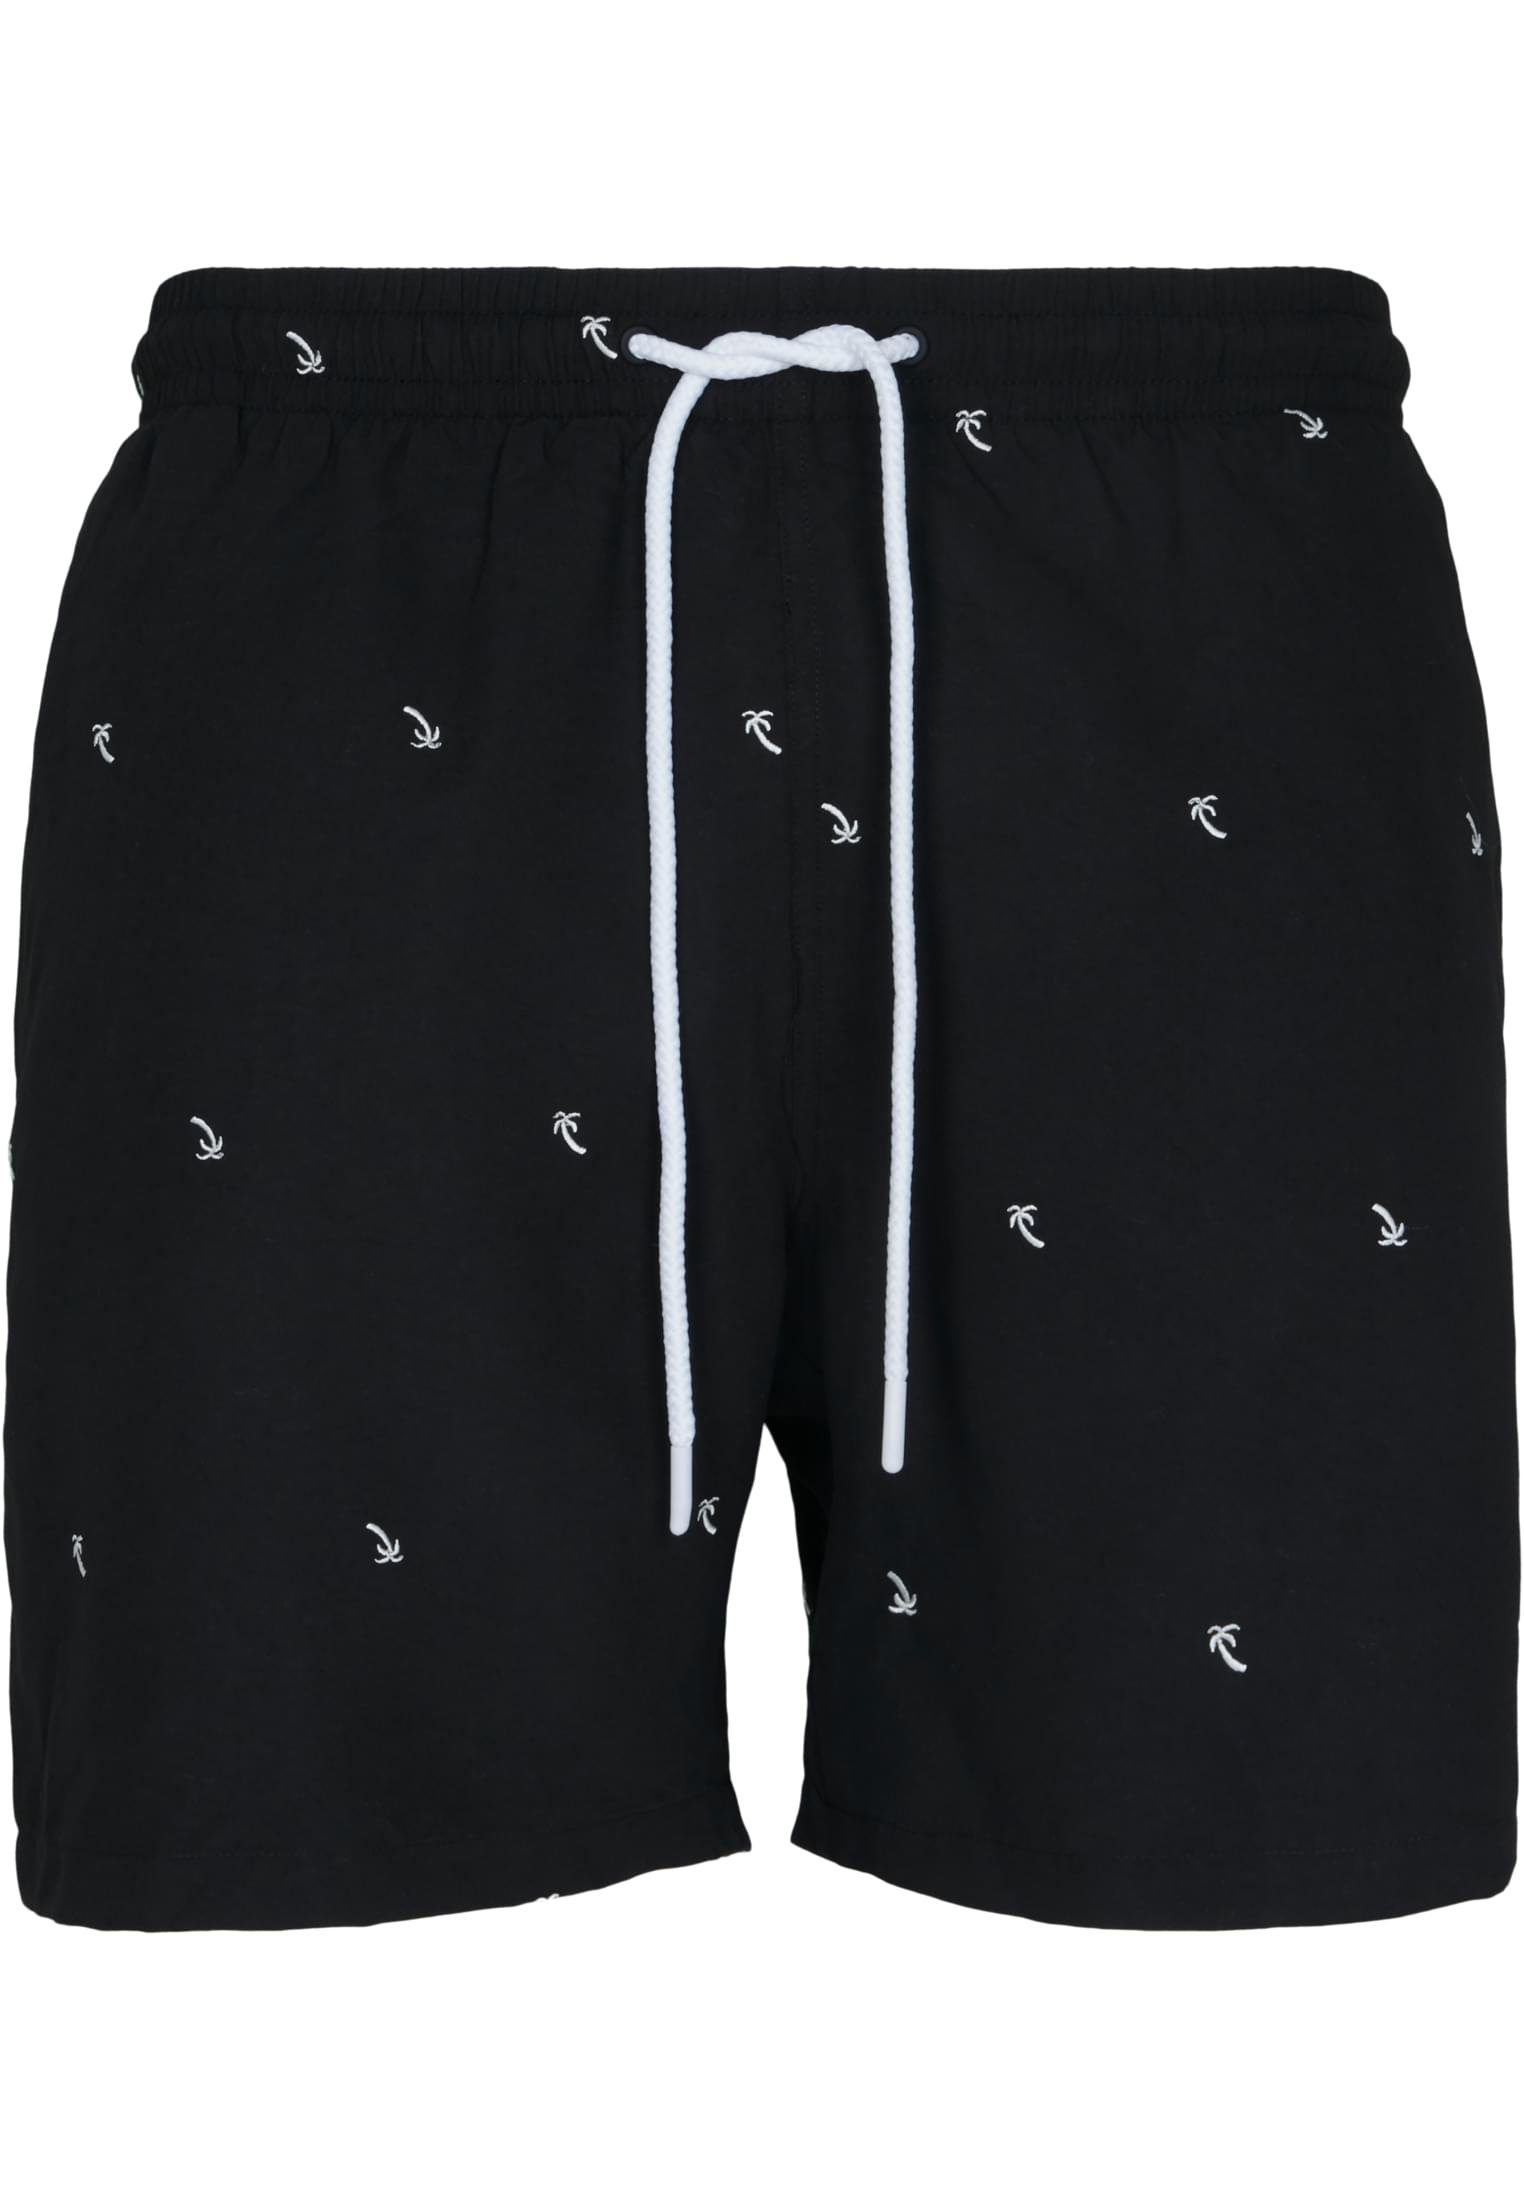 URBAN CLASSICS Badeshorts Shorts Swim black/palmtree Herren Embroidery